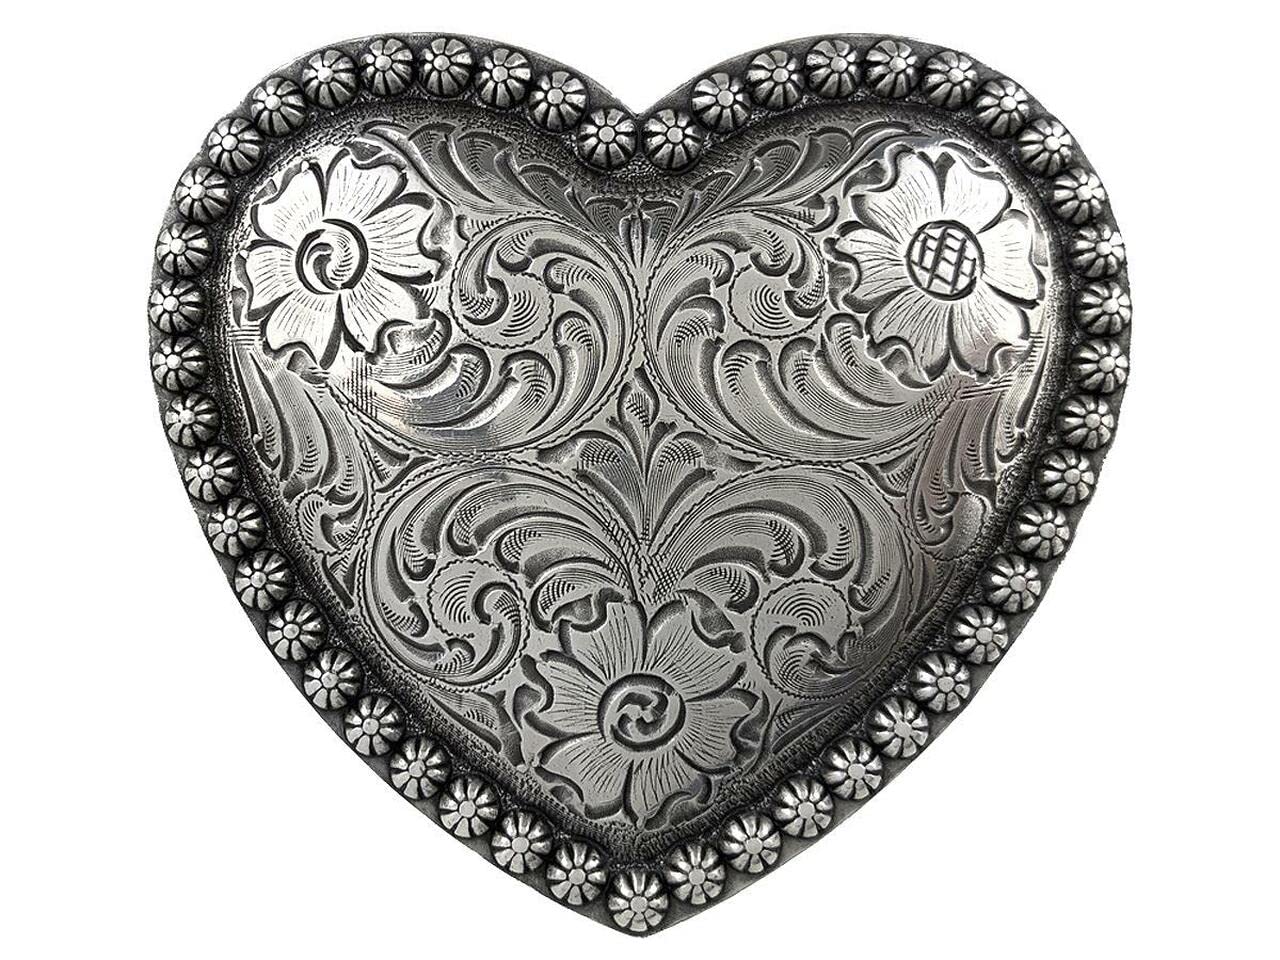 HA0478 Antique Floral Engraved Heart Berry Belt Buckle Fits 1-1/2"(38mm) Belt (Antique Silver)